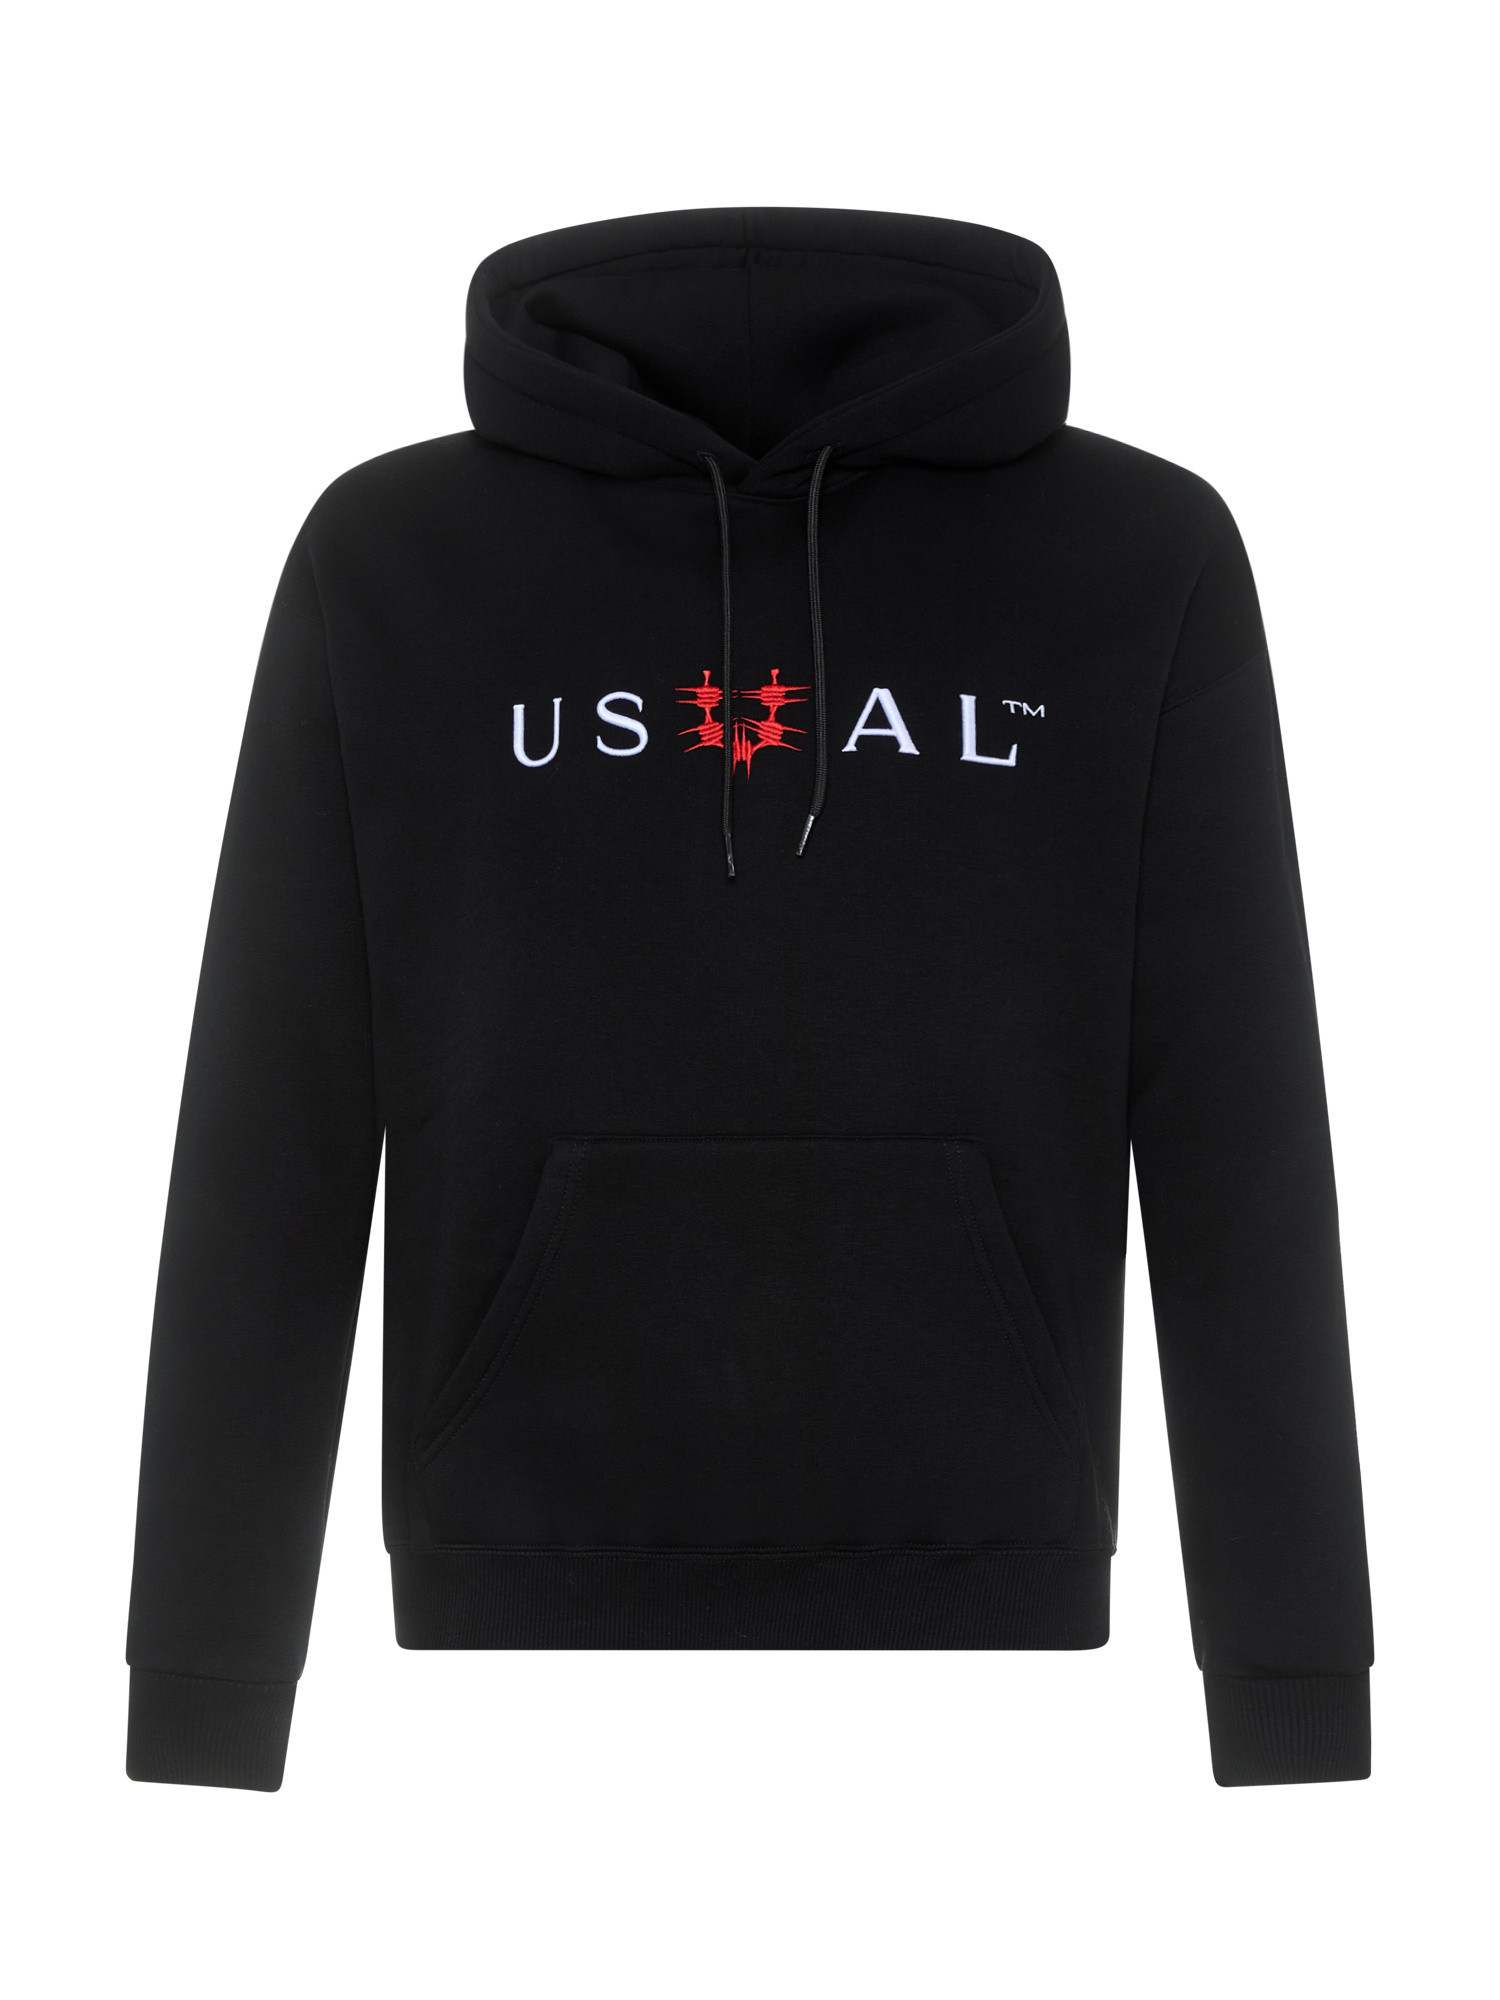 Usual - Octane Hooded Sweatshirt, Black, large image number 0